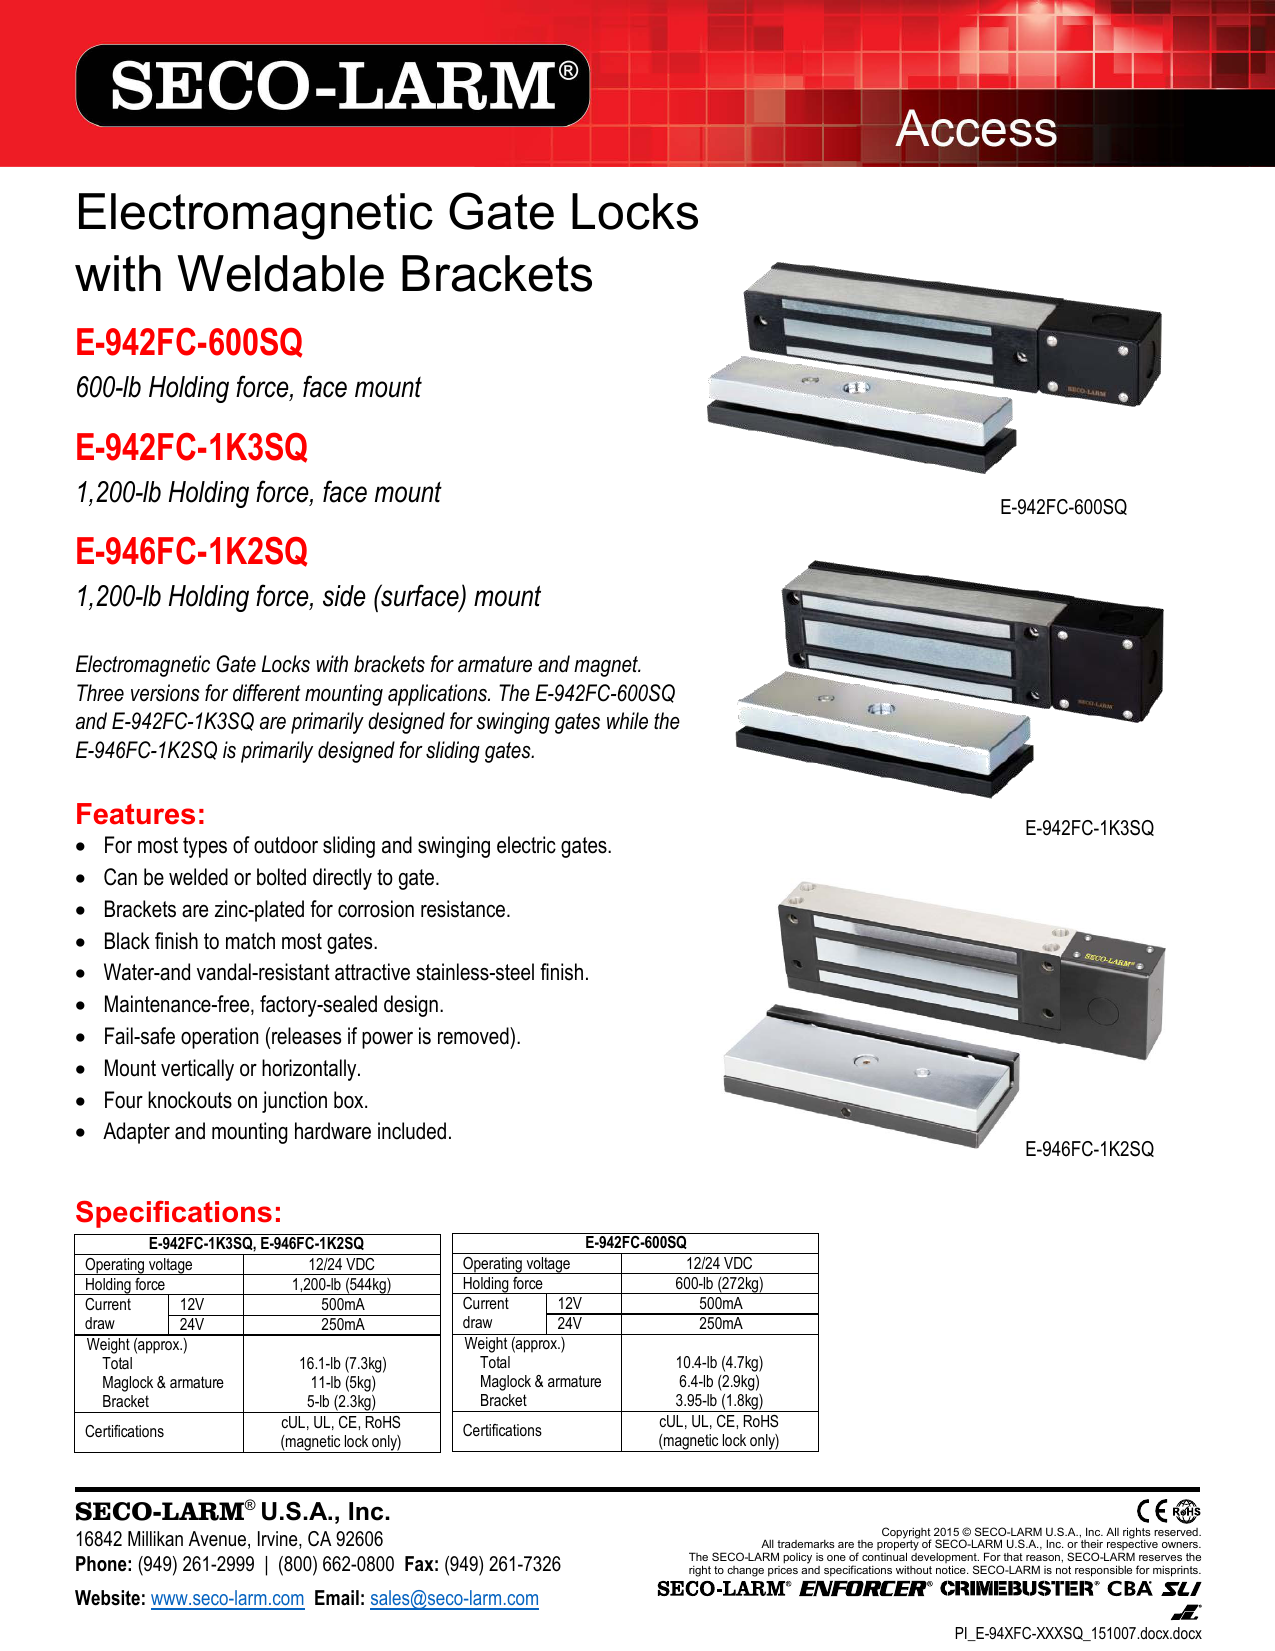 E-942FC-600 600 Lbs. Seco-Larm Enforcer Electromagnetic Gate Lock